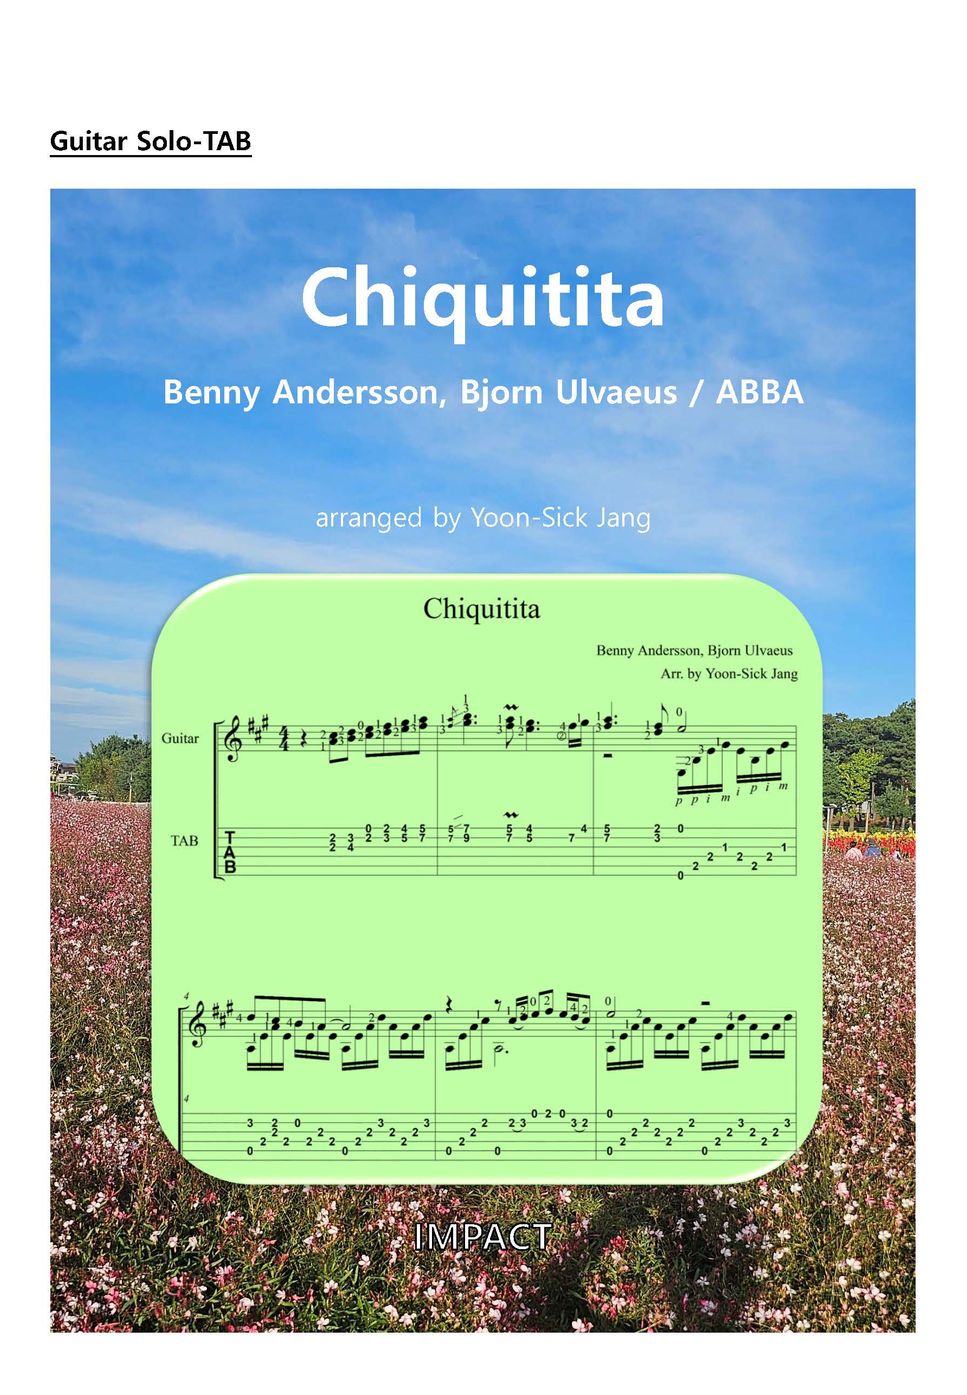 Benny Andersson, Bjorn Ulvaeus - Chiquitita by Yoon-Sick Jang